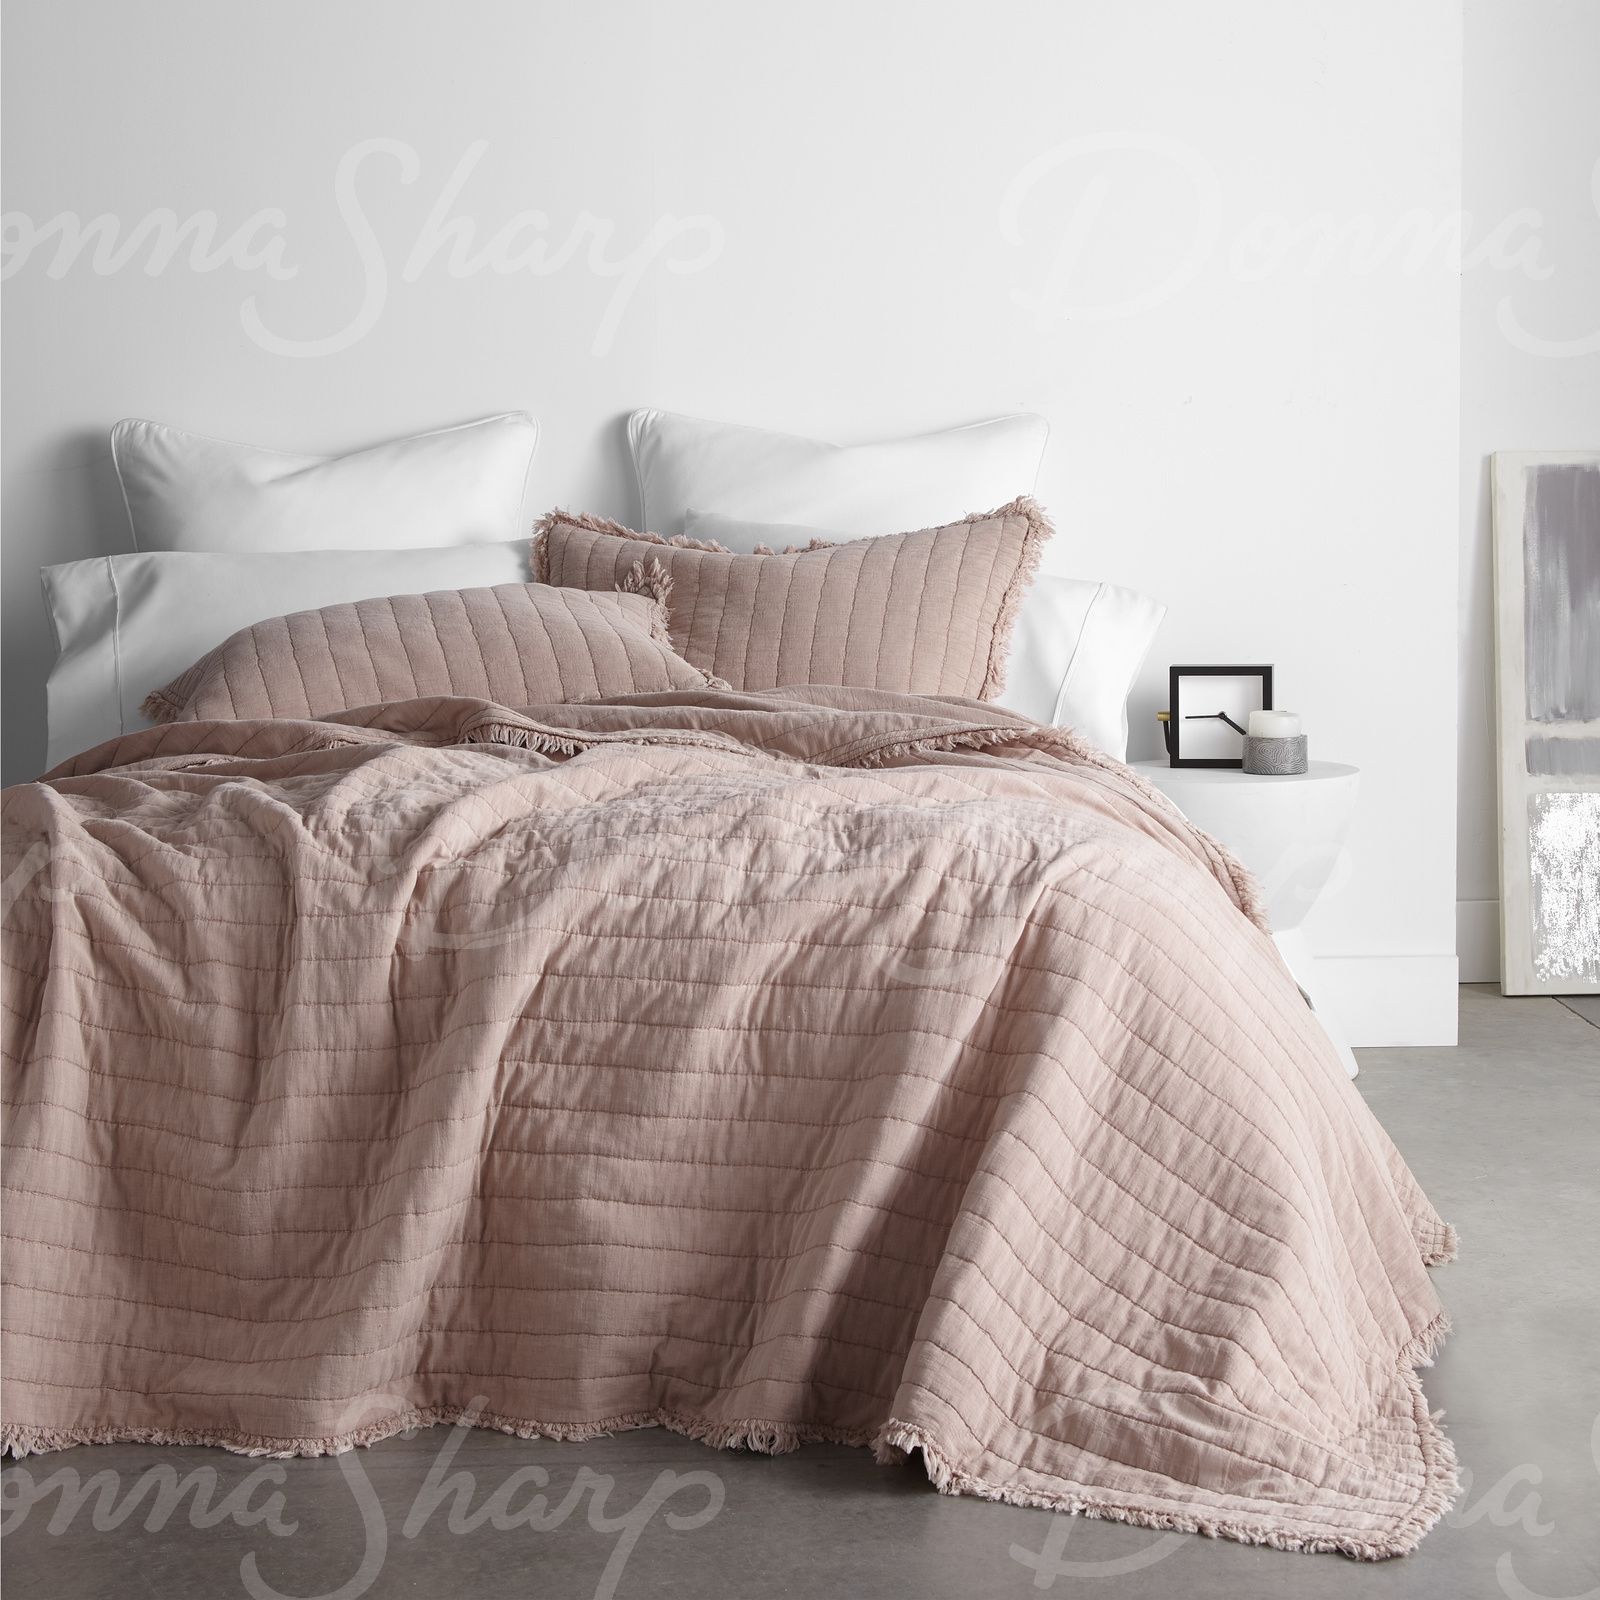 Delano Cotton Quilted 3-piece Bedding Set